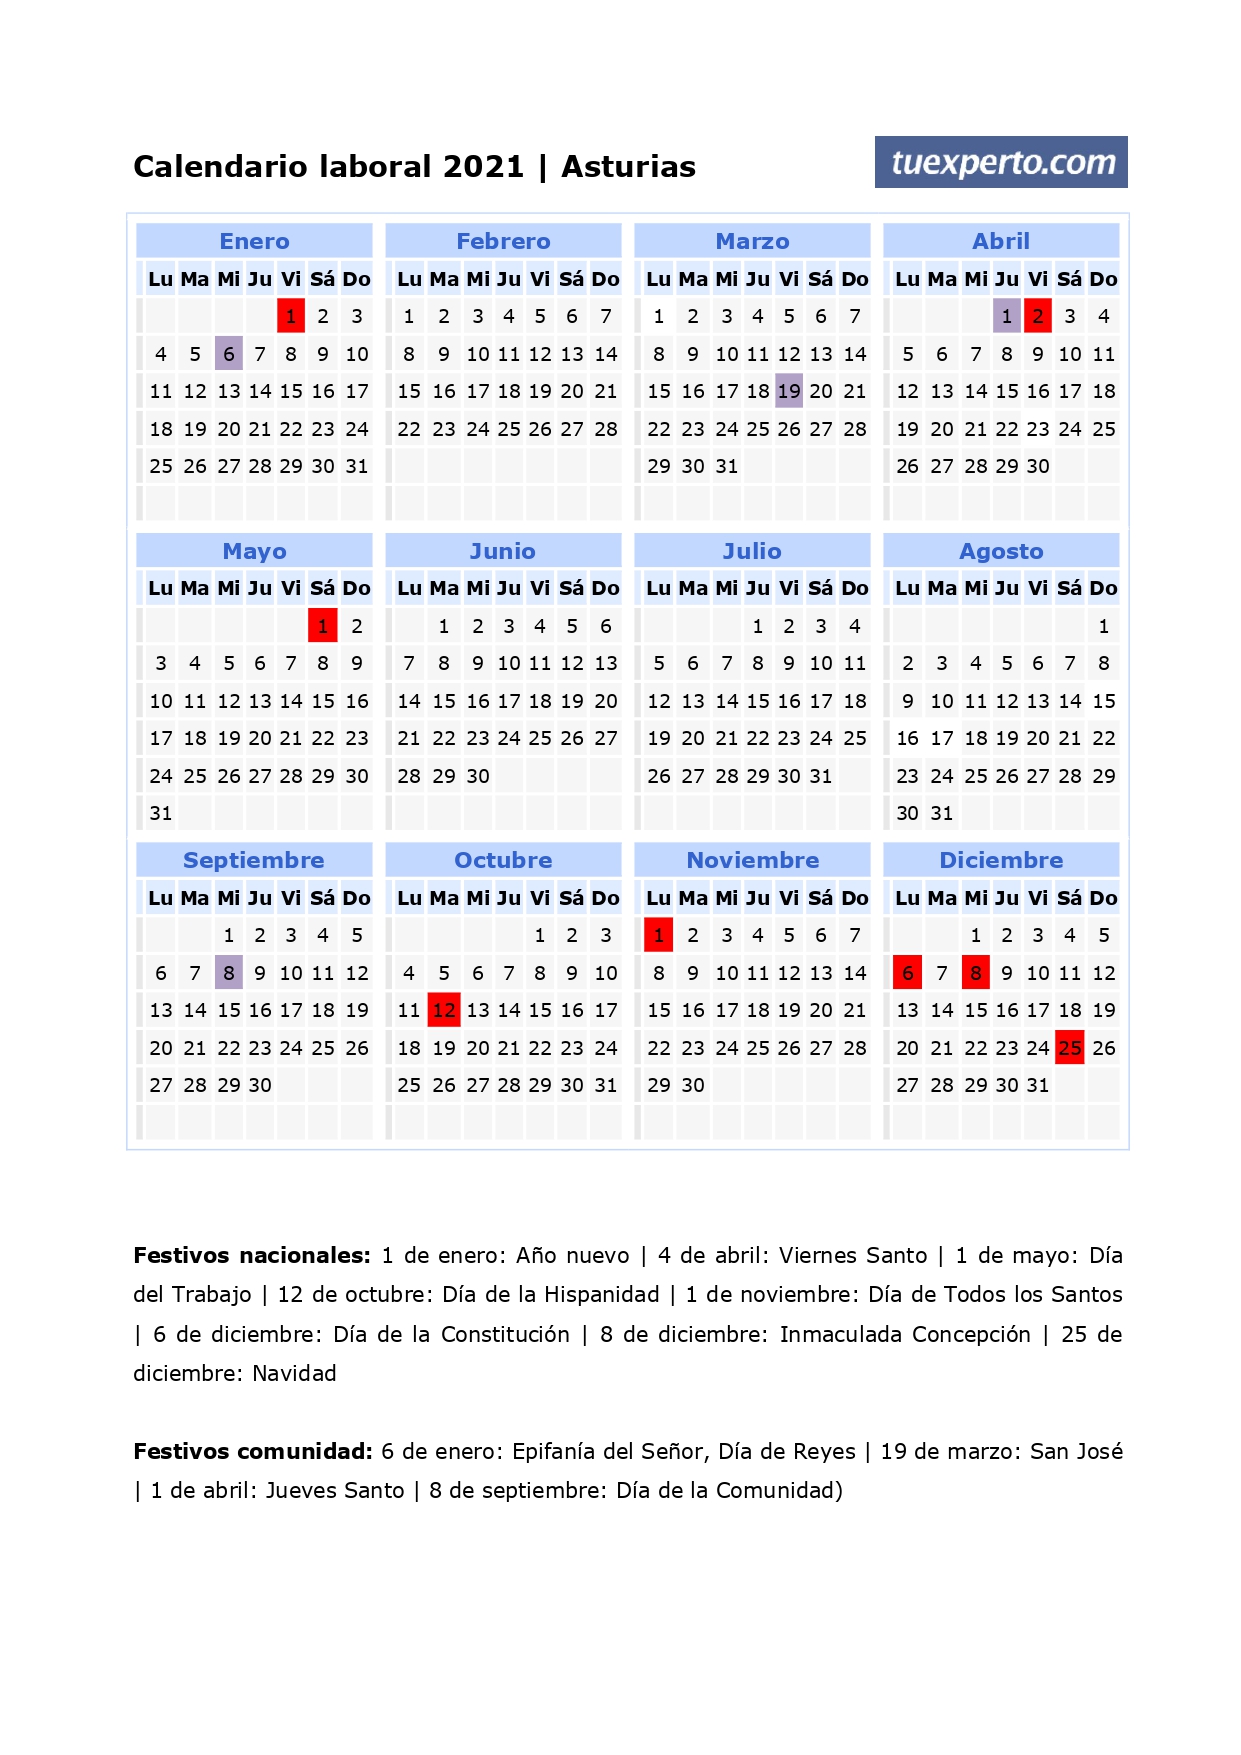 Calendario laboral 2021, calendarios con festivos por comunidad para imprimir 1